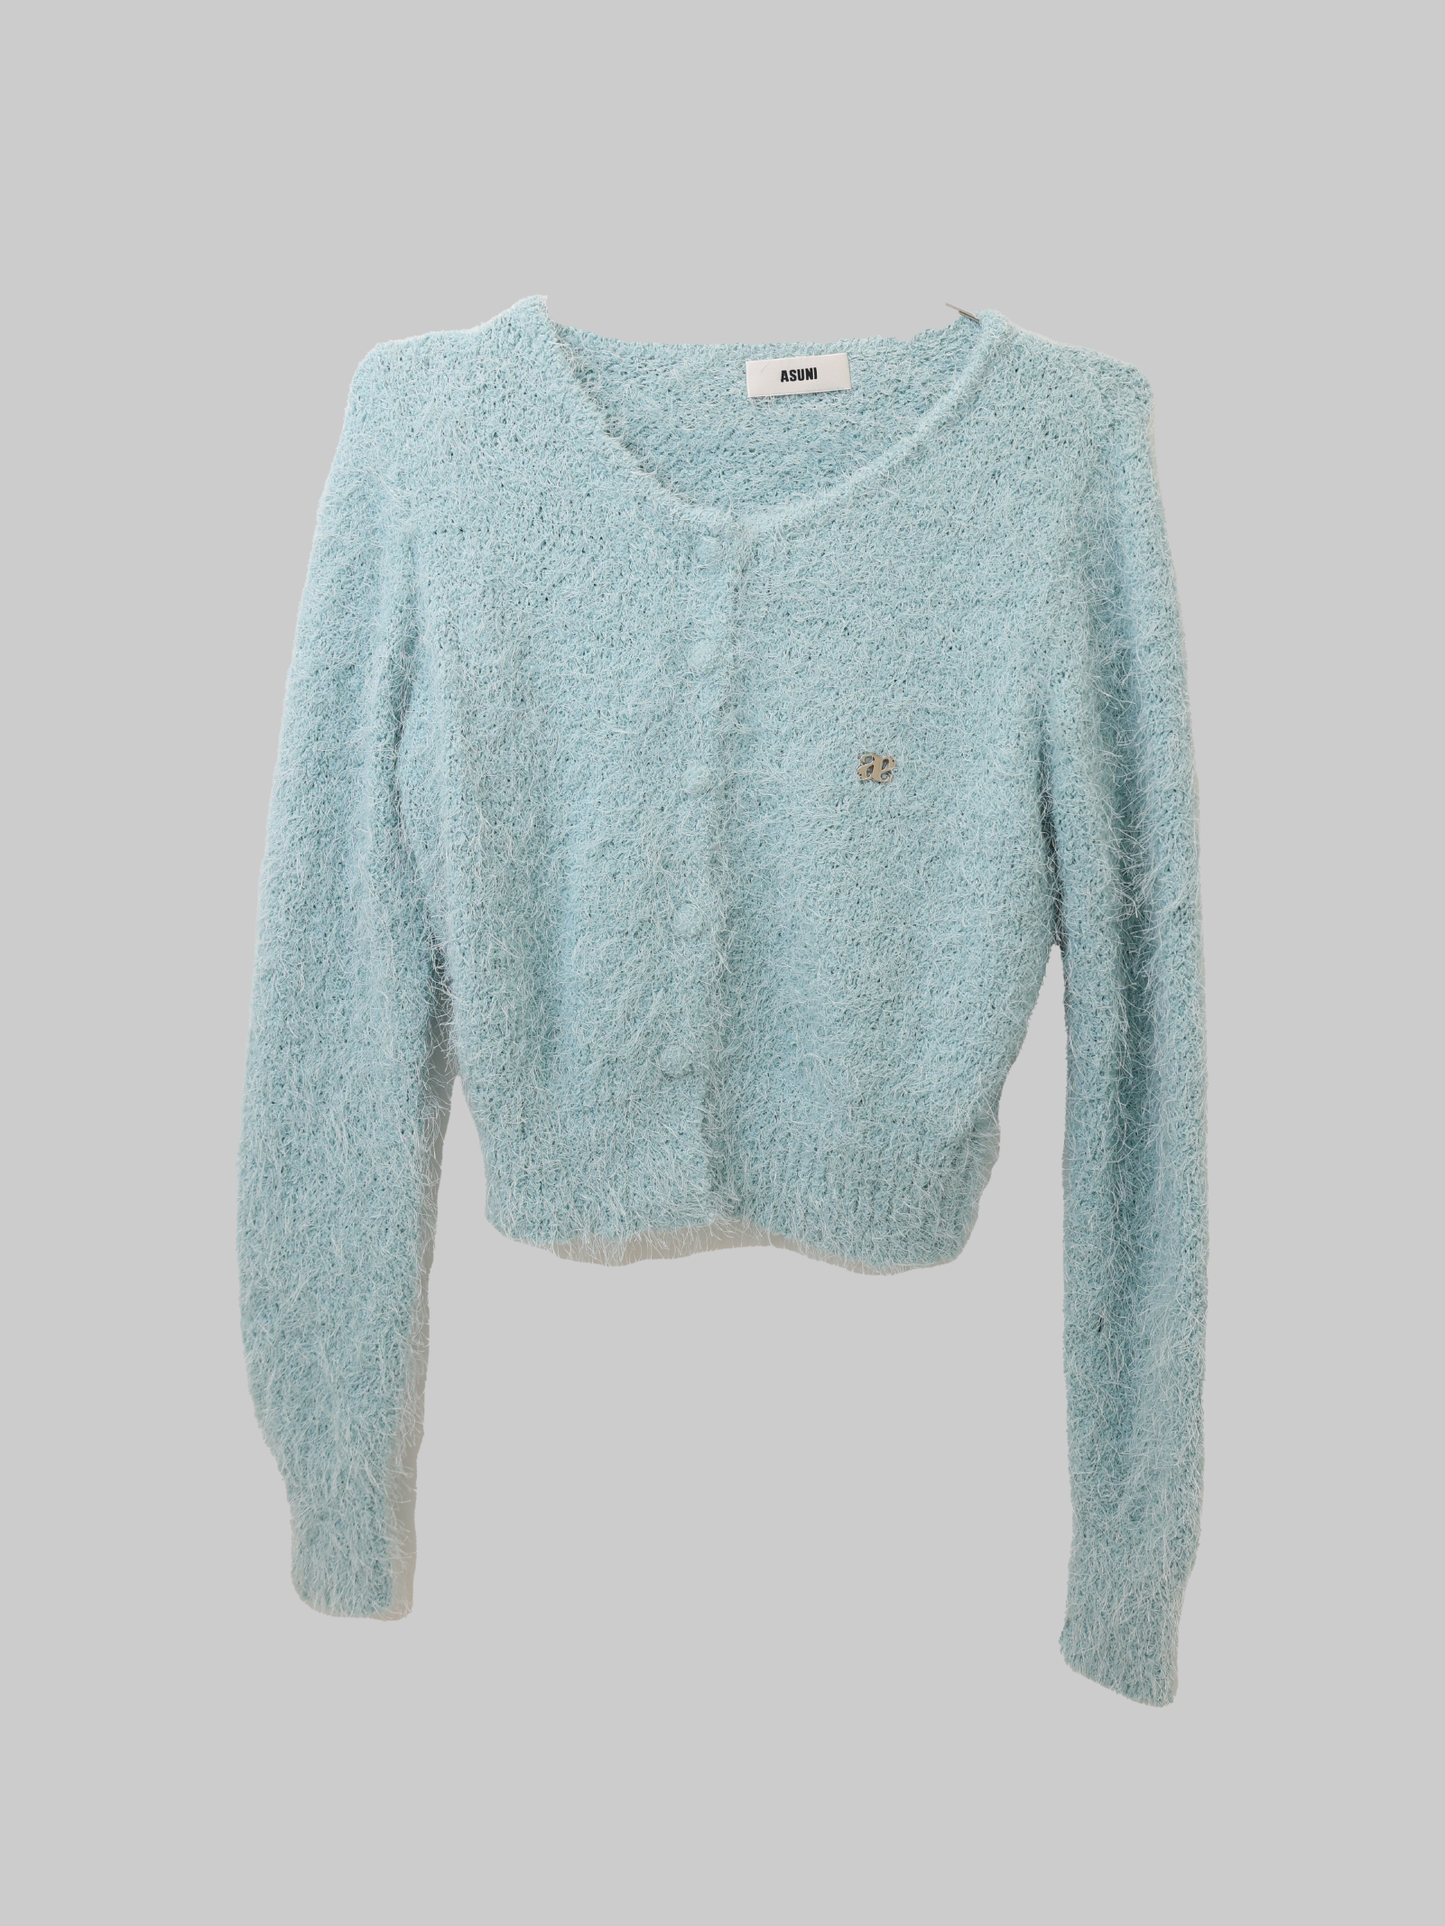 asuni Fluffy Knit Cardigan Sweater in blue